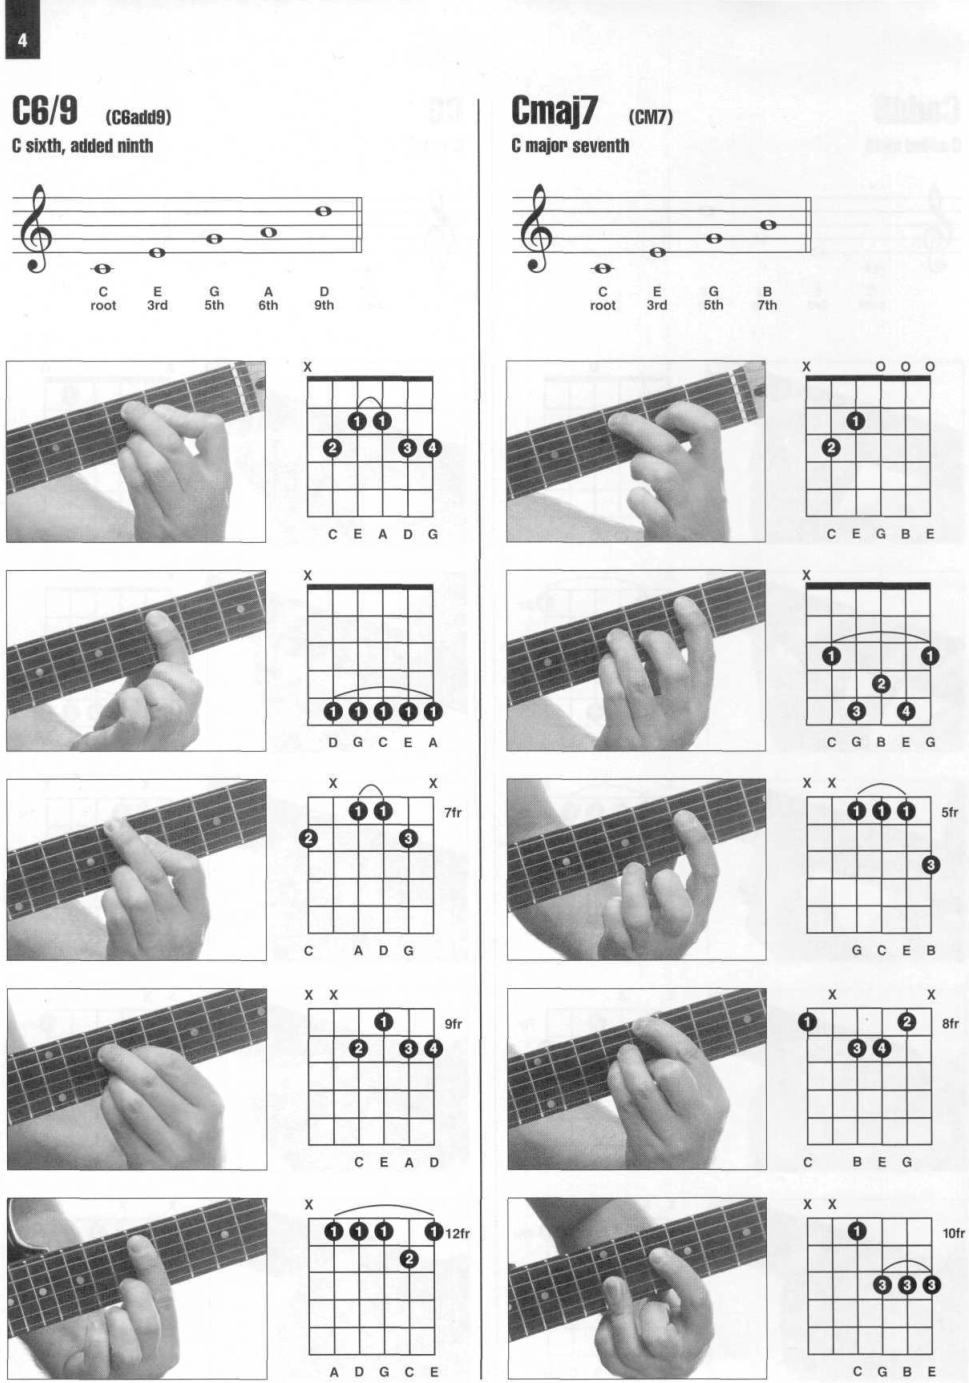 Pages from Enciclopedia visual de acordes de guitarra HAL LEONARD Page 004.png